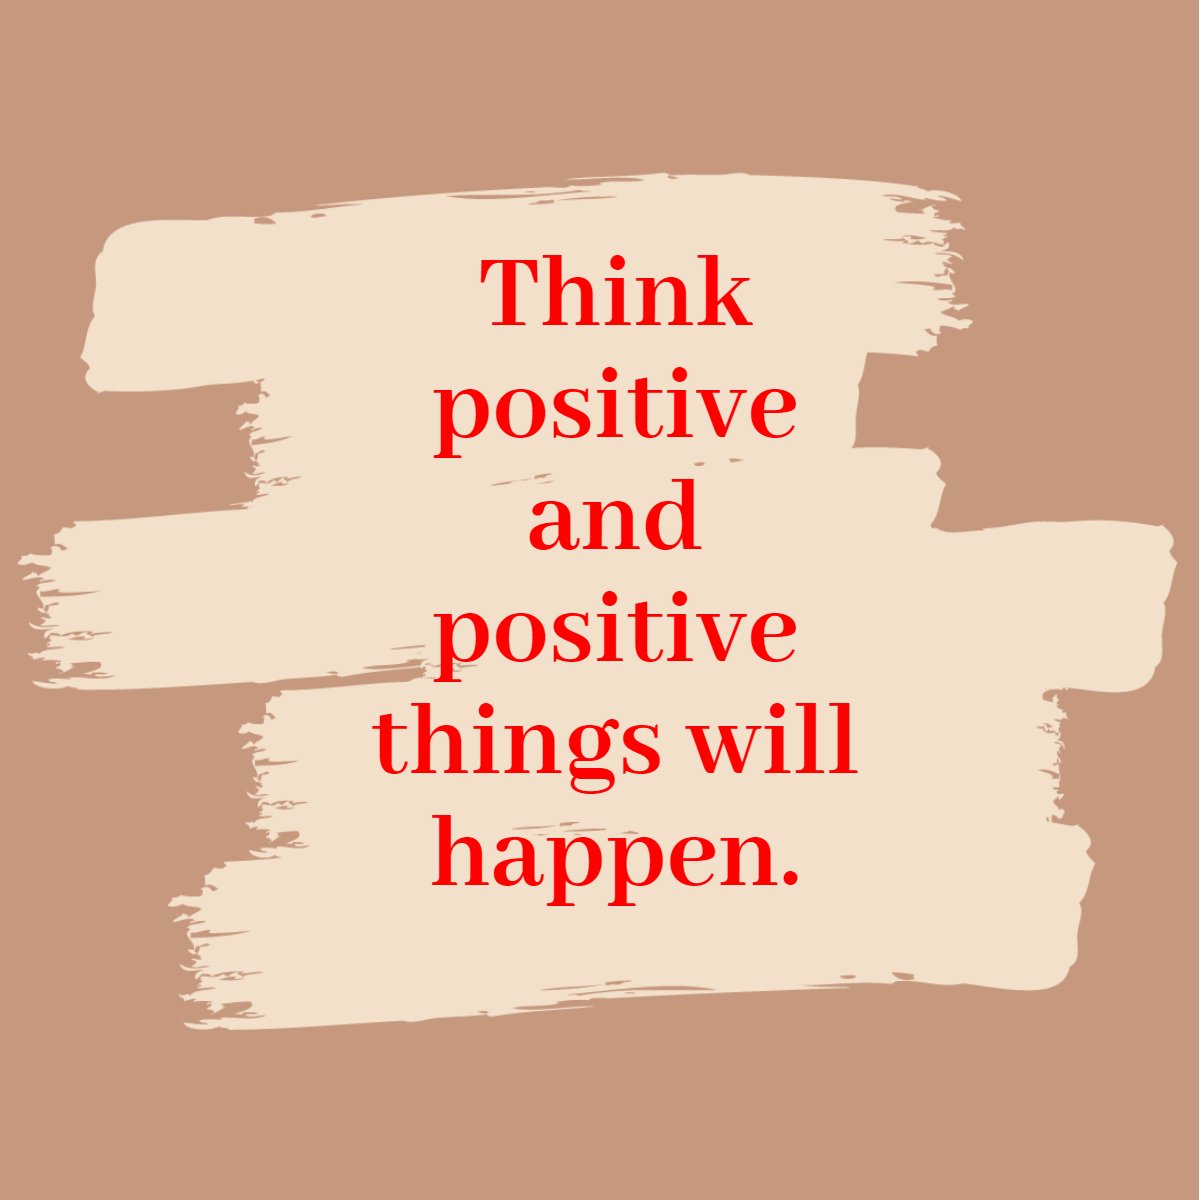 'When you think positive, good things happen.'
― Matt Kemp 

#positivethoughts #positivethoughtsonly #lawofpositivism #positivism #positiveaffirmationsthoughts
 #realestatelife #realestate #realestatenews #HomeBuying #HomebuyingEducation #cedarrapidsiowa #homeownership